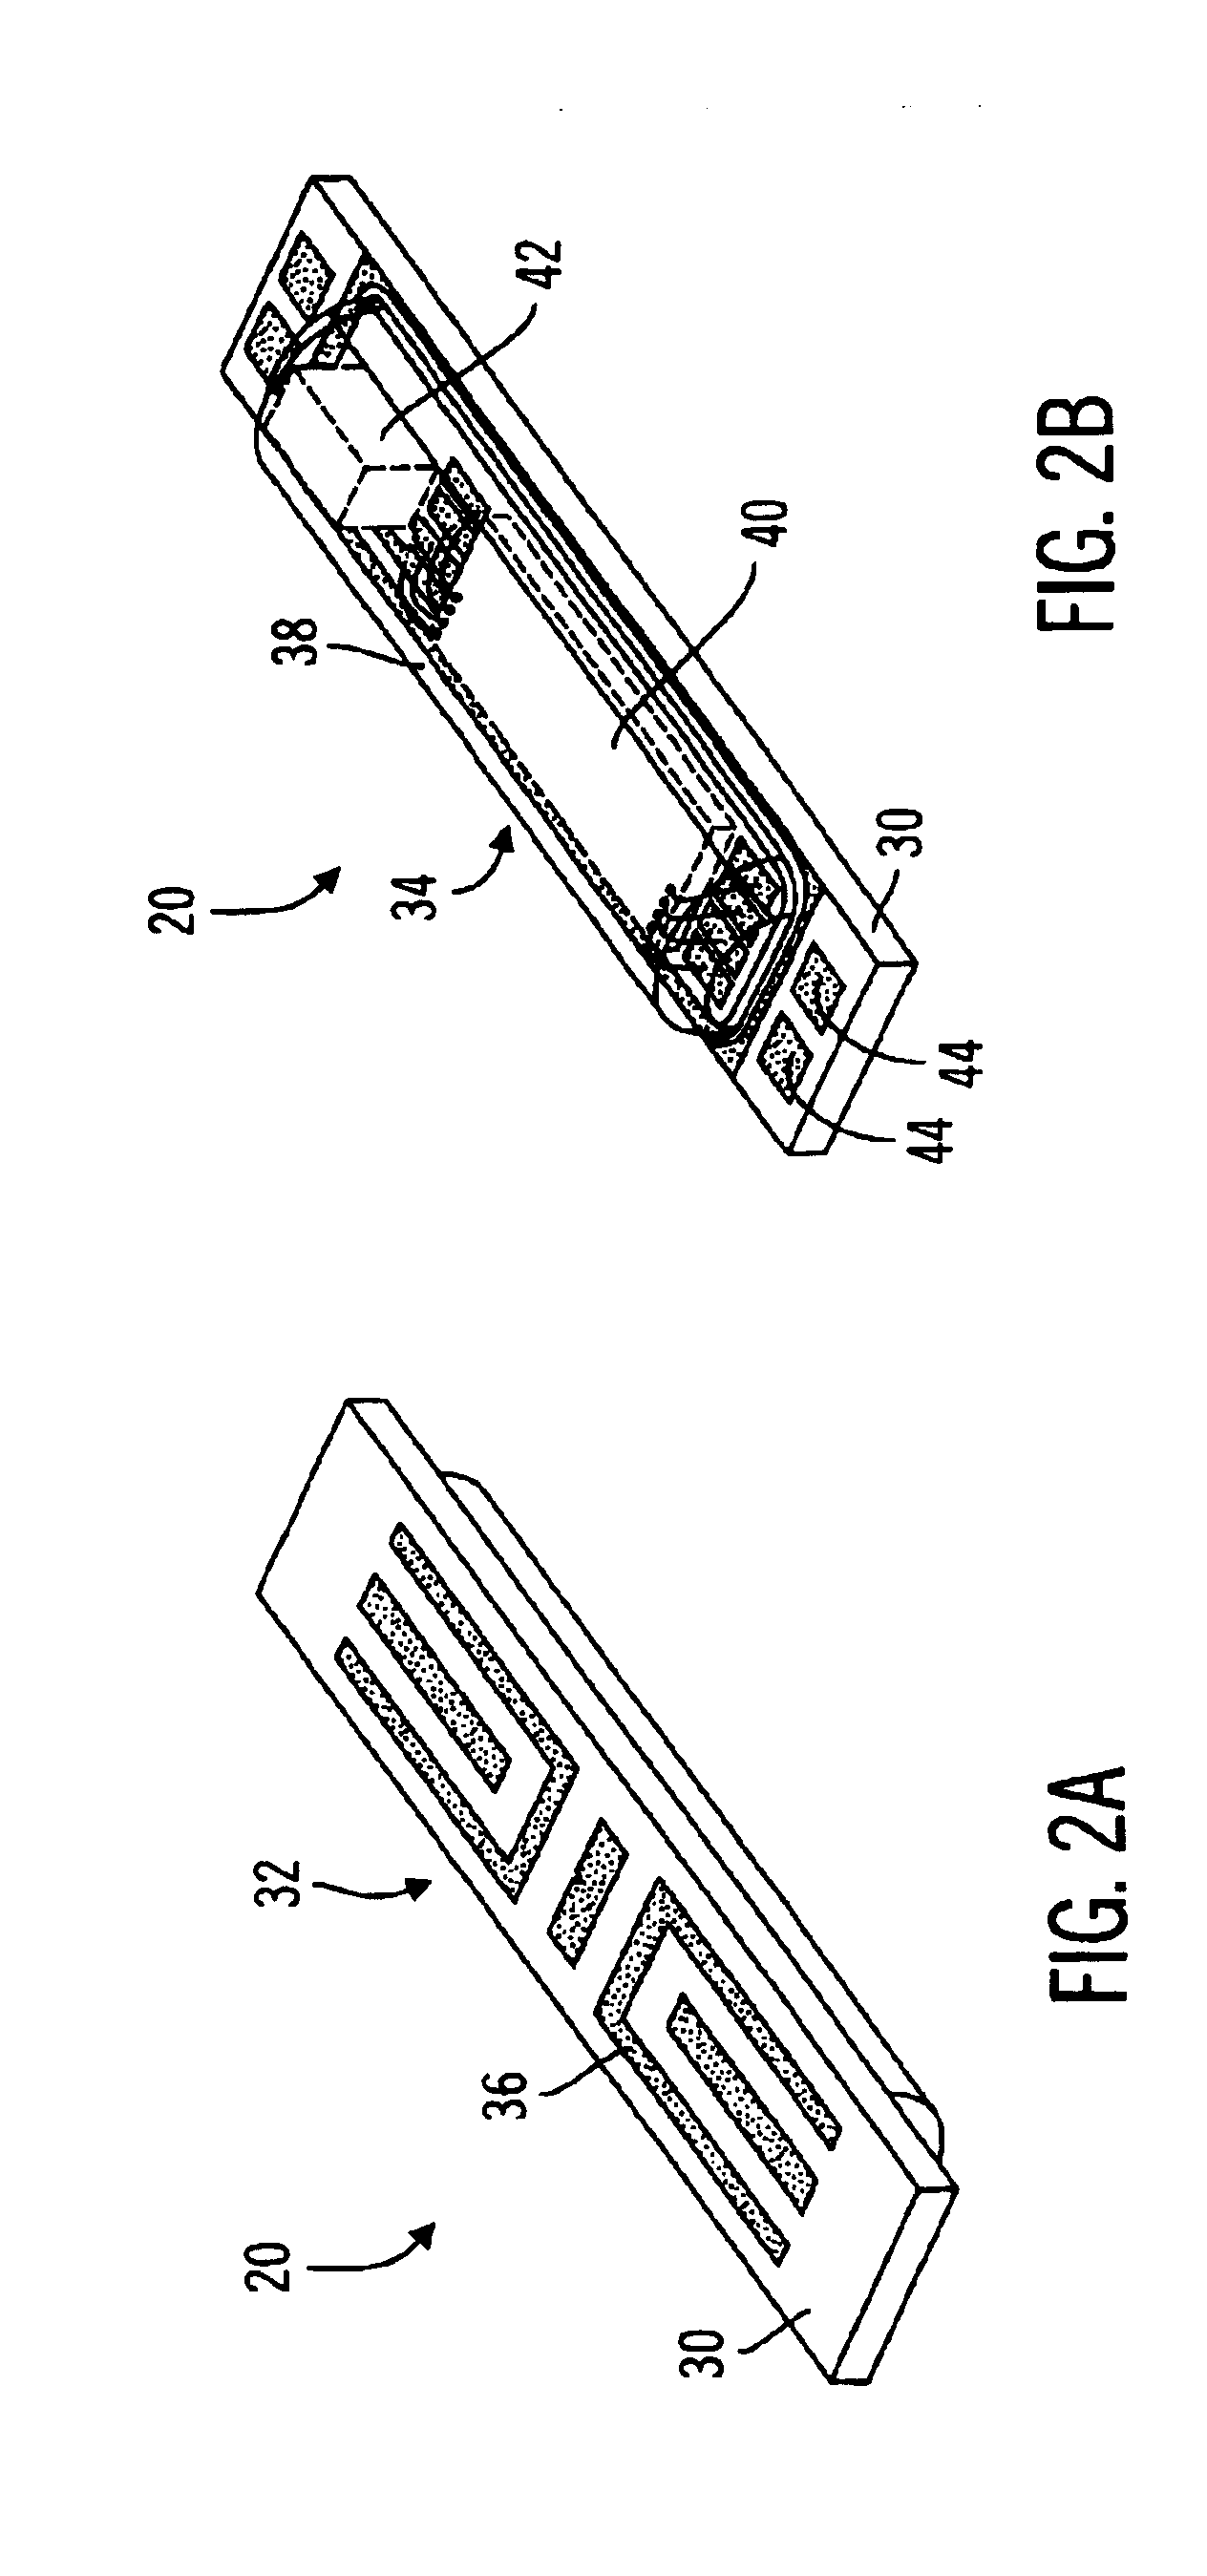 Sensing apparatus and process